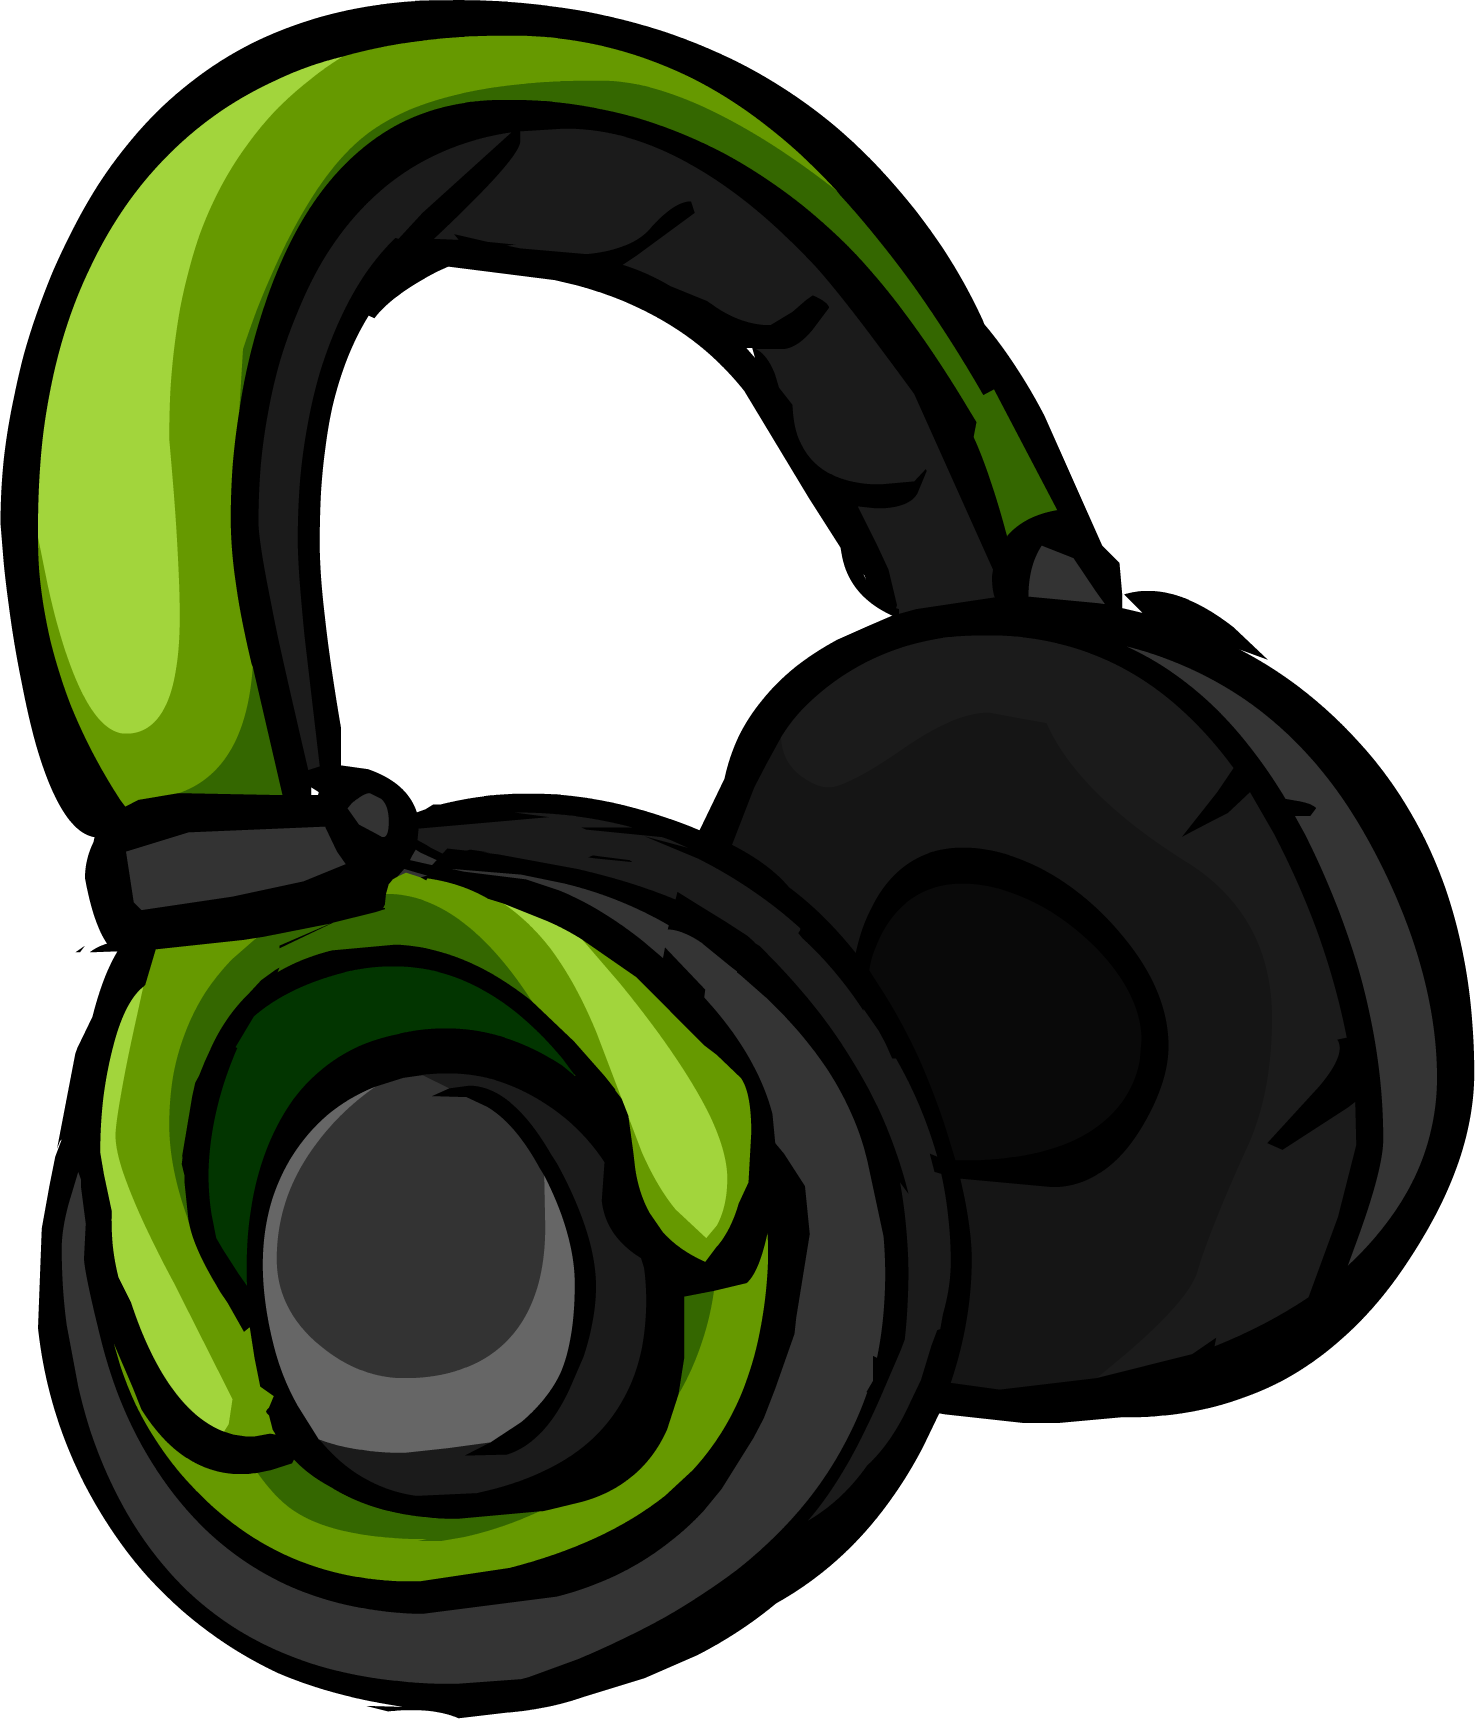 Headphones clipart gaming headset, Headphones gaming headset